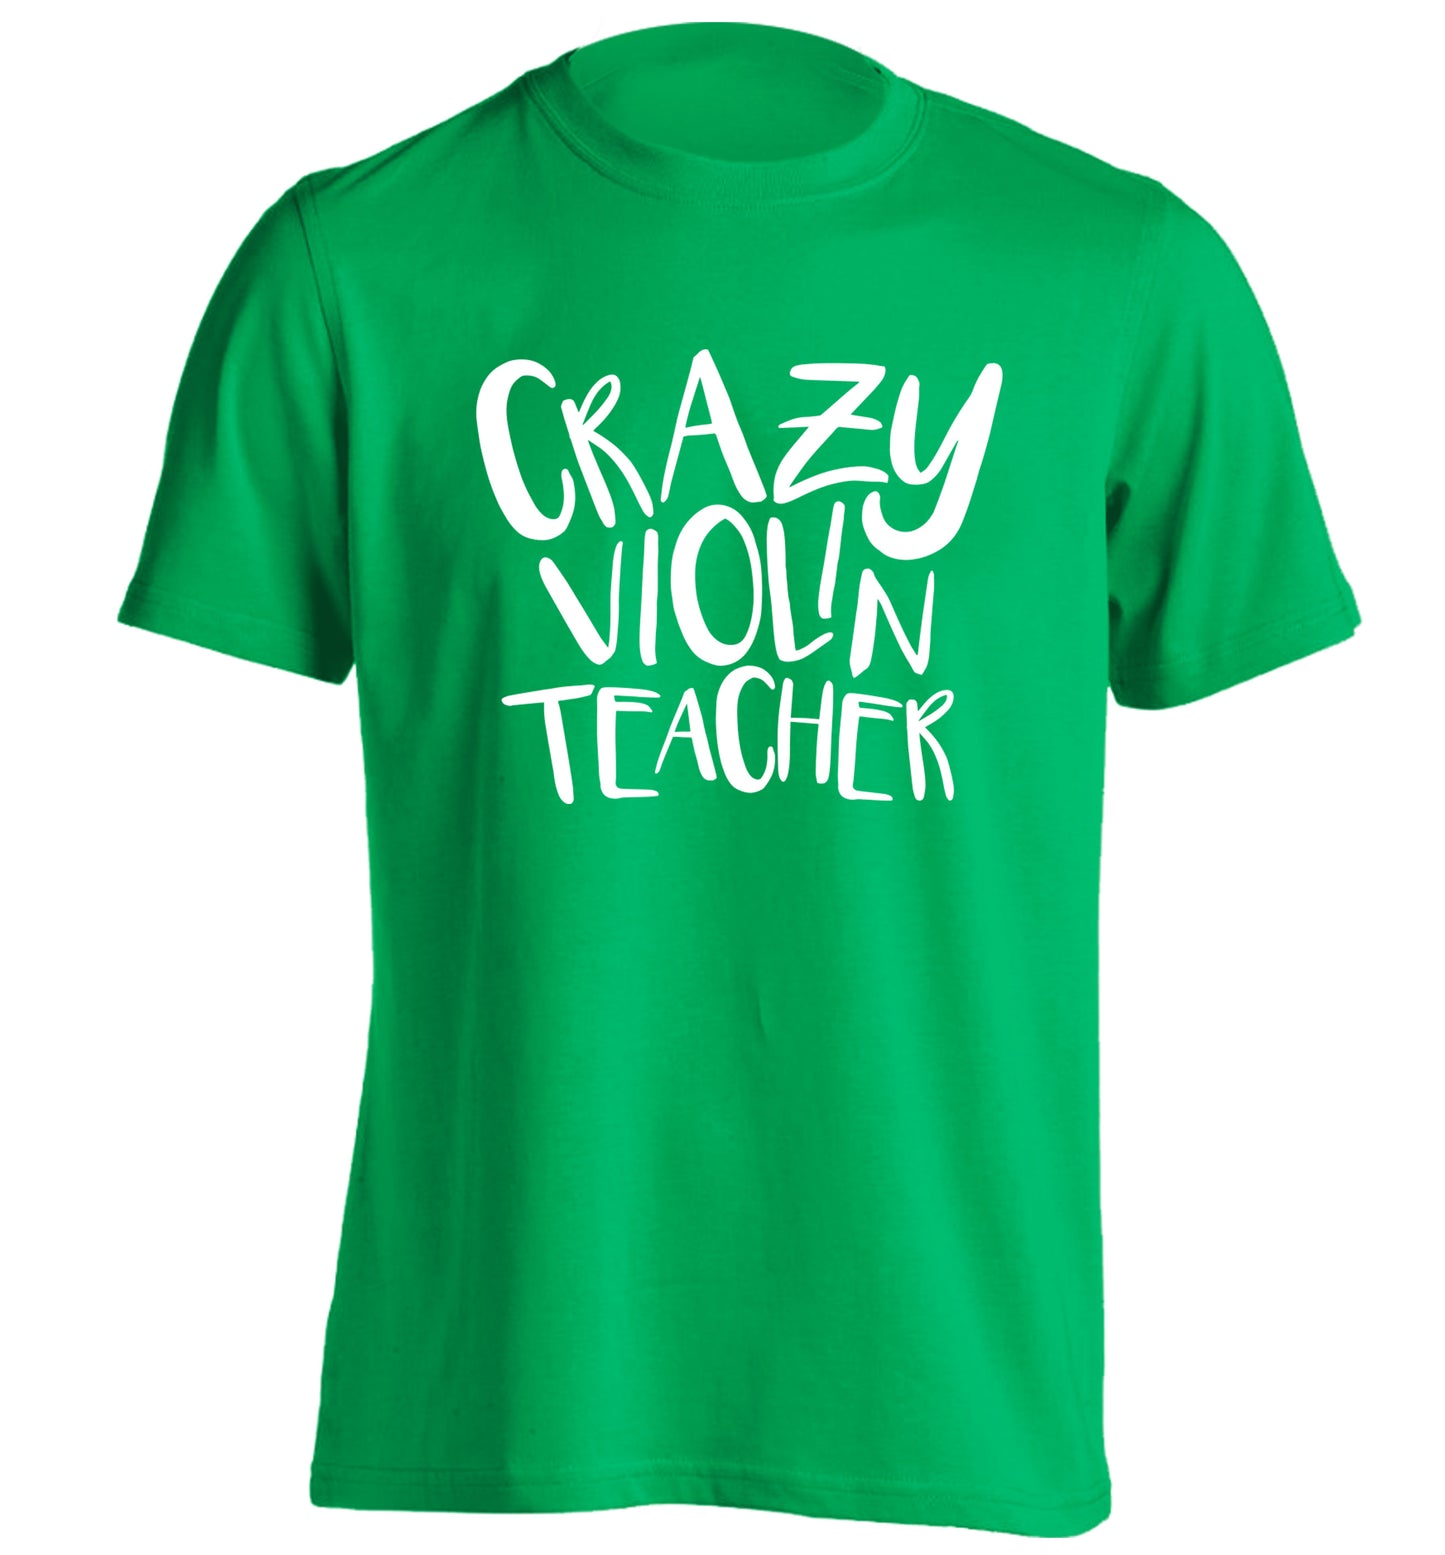 Crazy violin teacher adults unisex green Tshirt 2XL